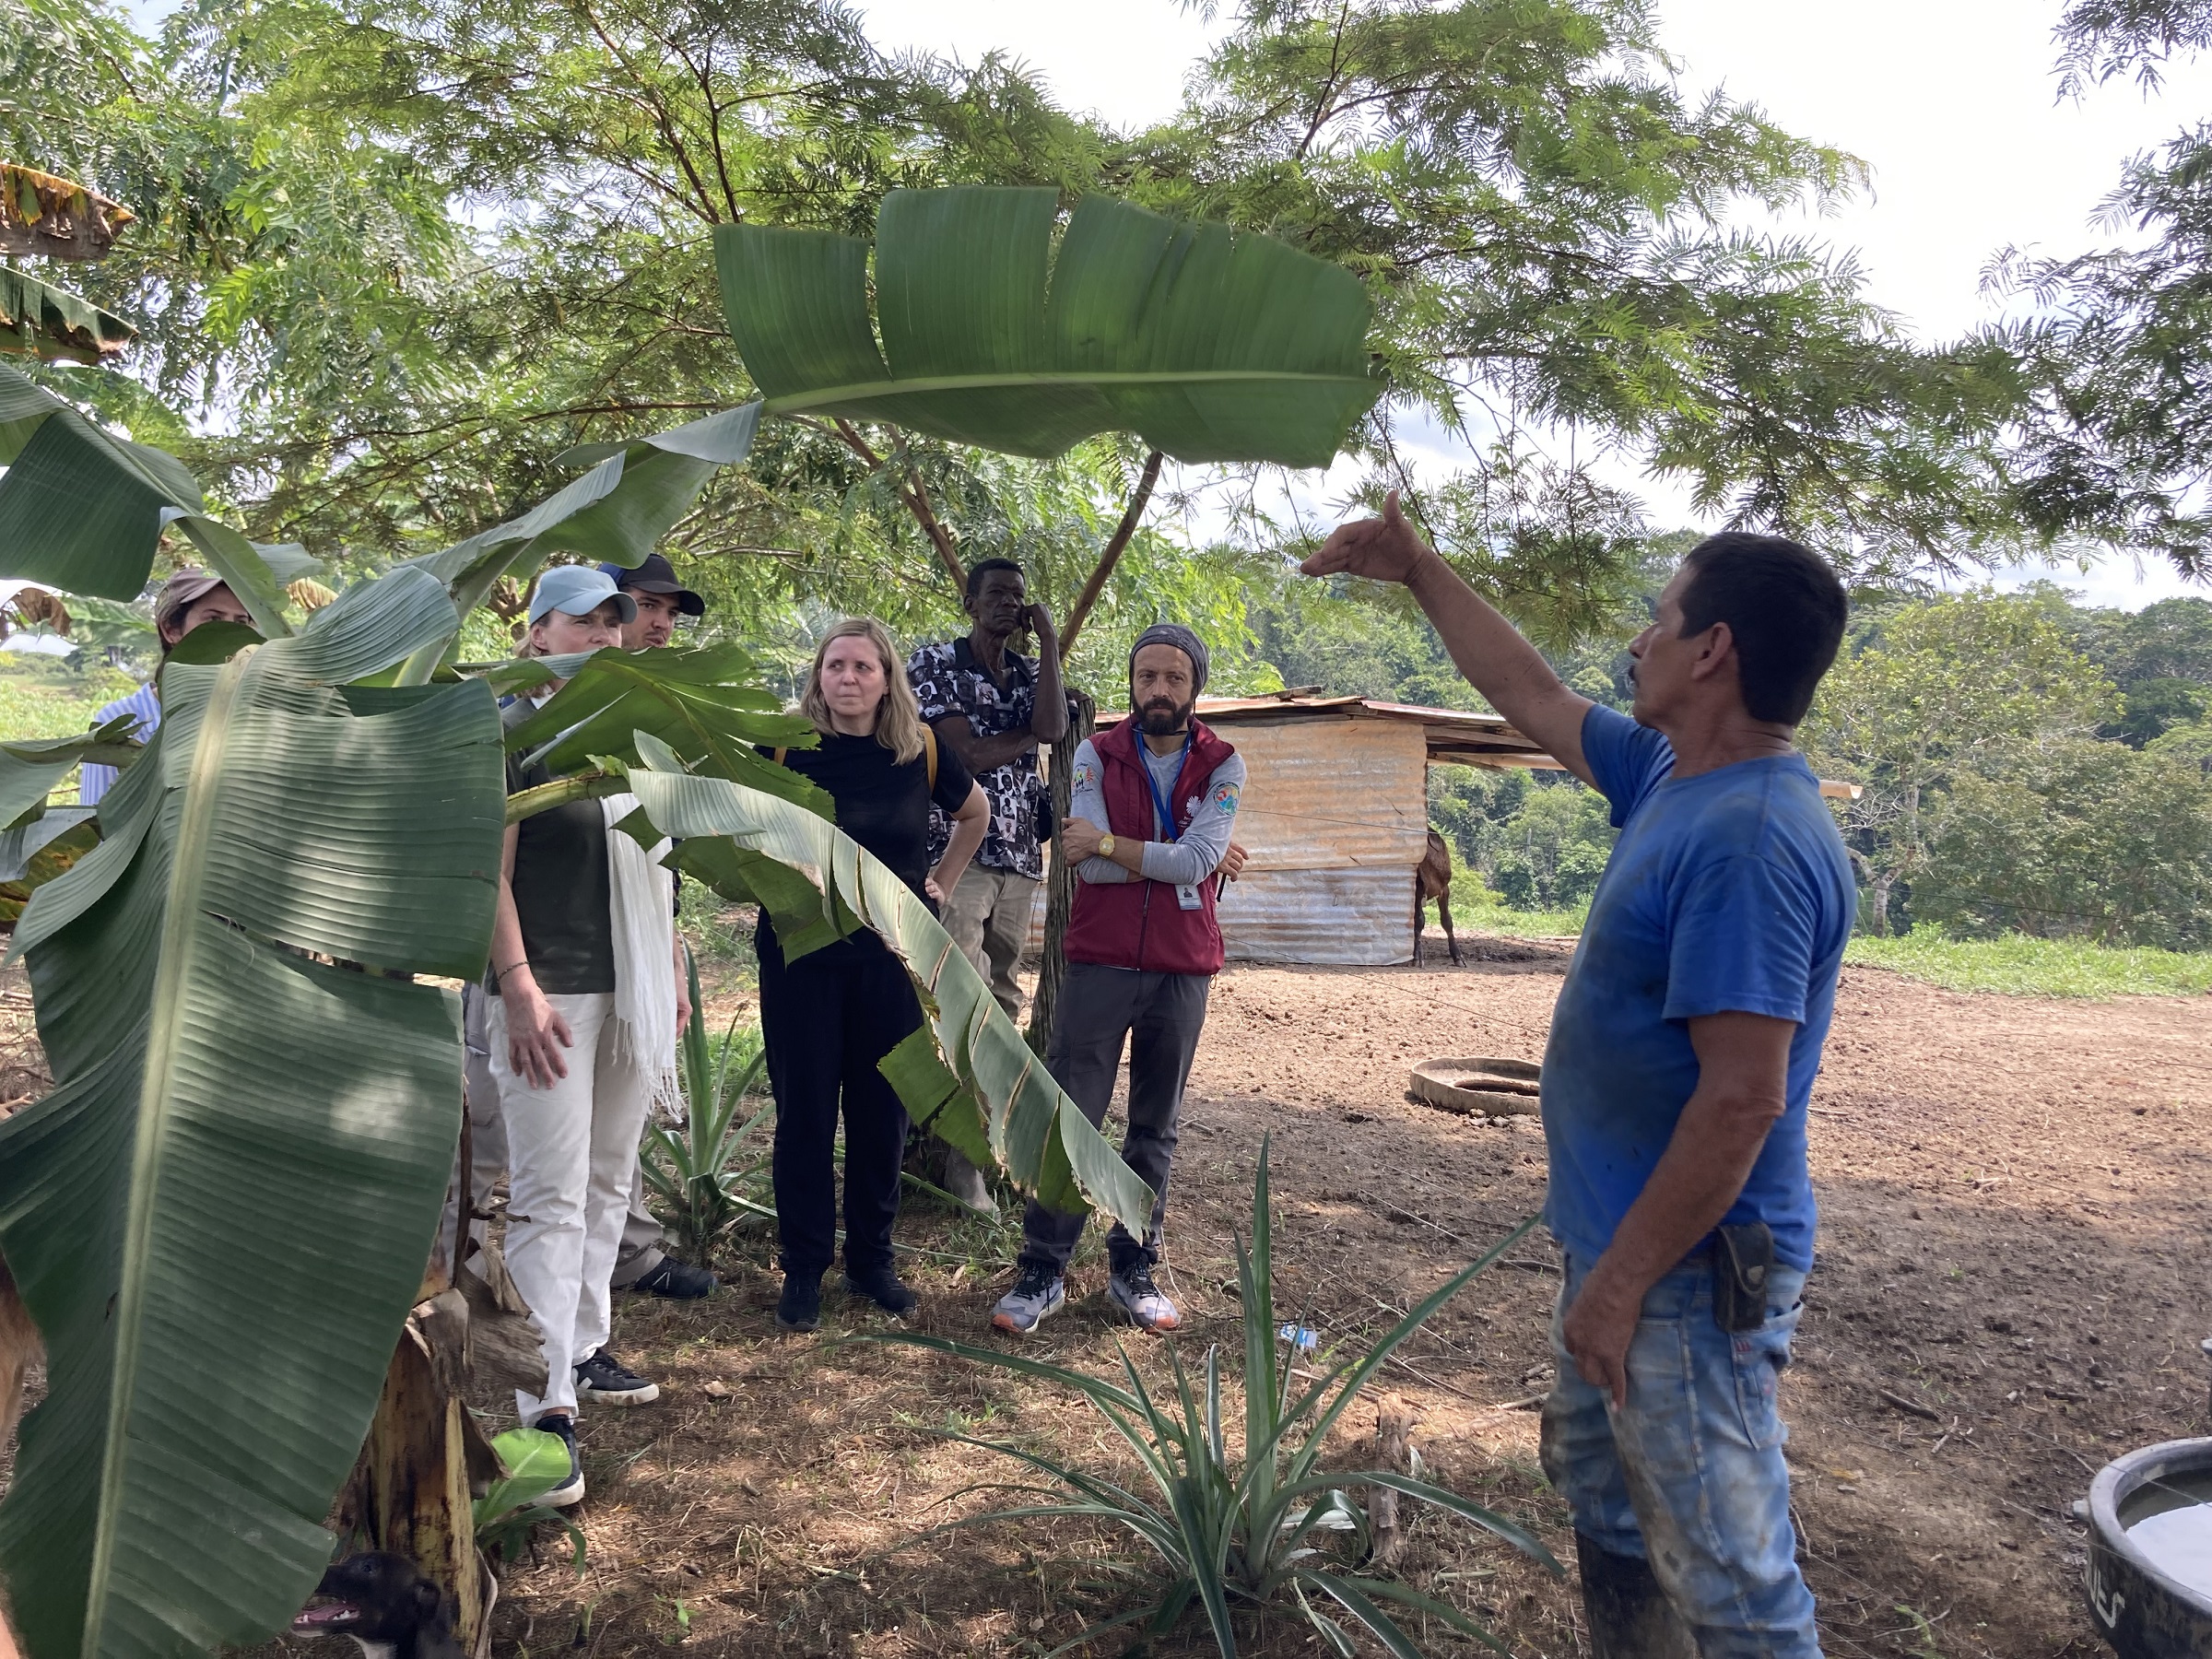 Mannlig deltaker i skogbevaringsprosjekt i Colombia forteller om arbeidet til representanter fra Norad og den norske ambassaden i Colombia.